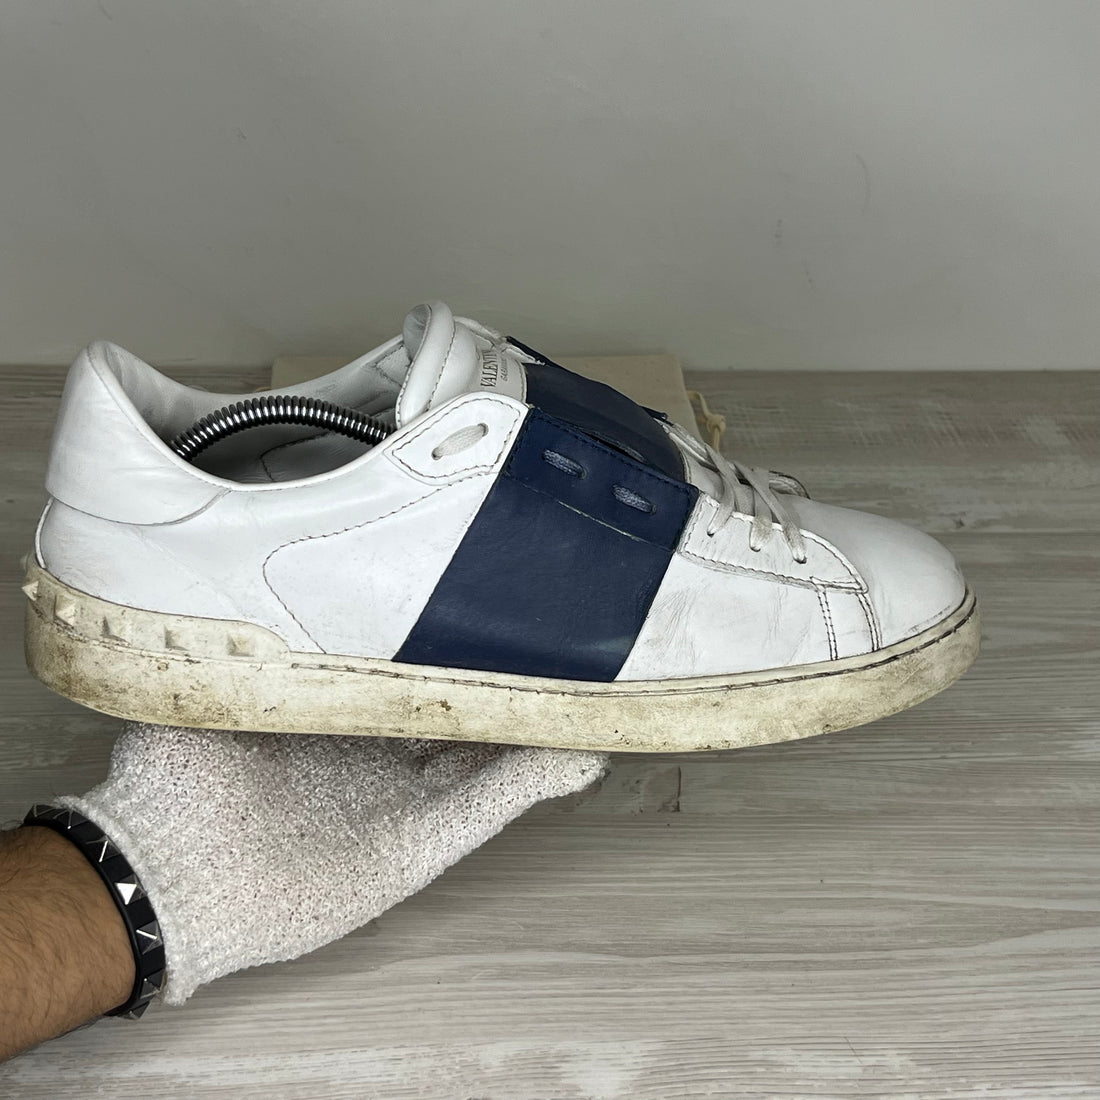 Valentino Sneakers, &